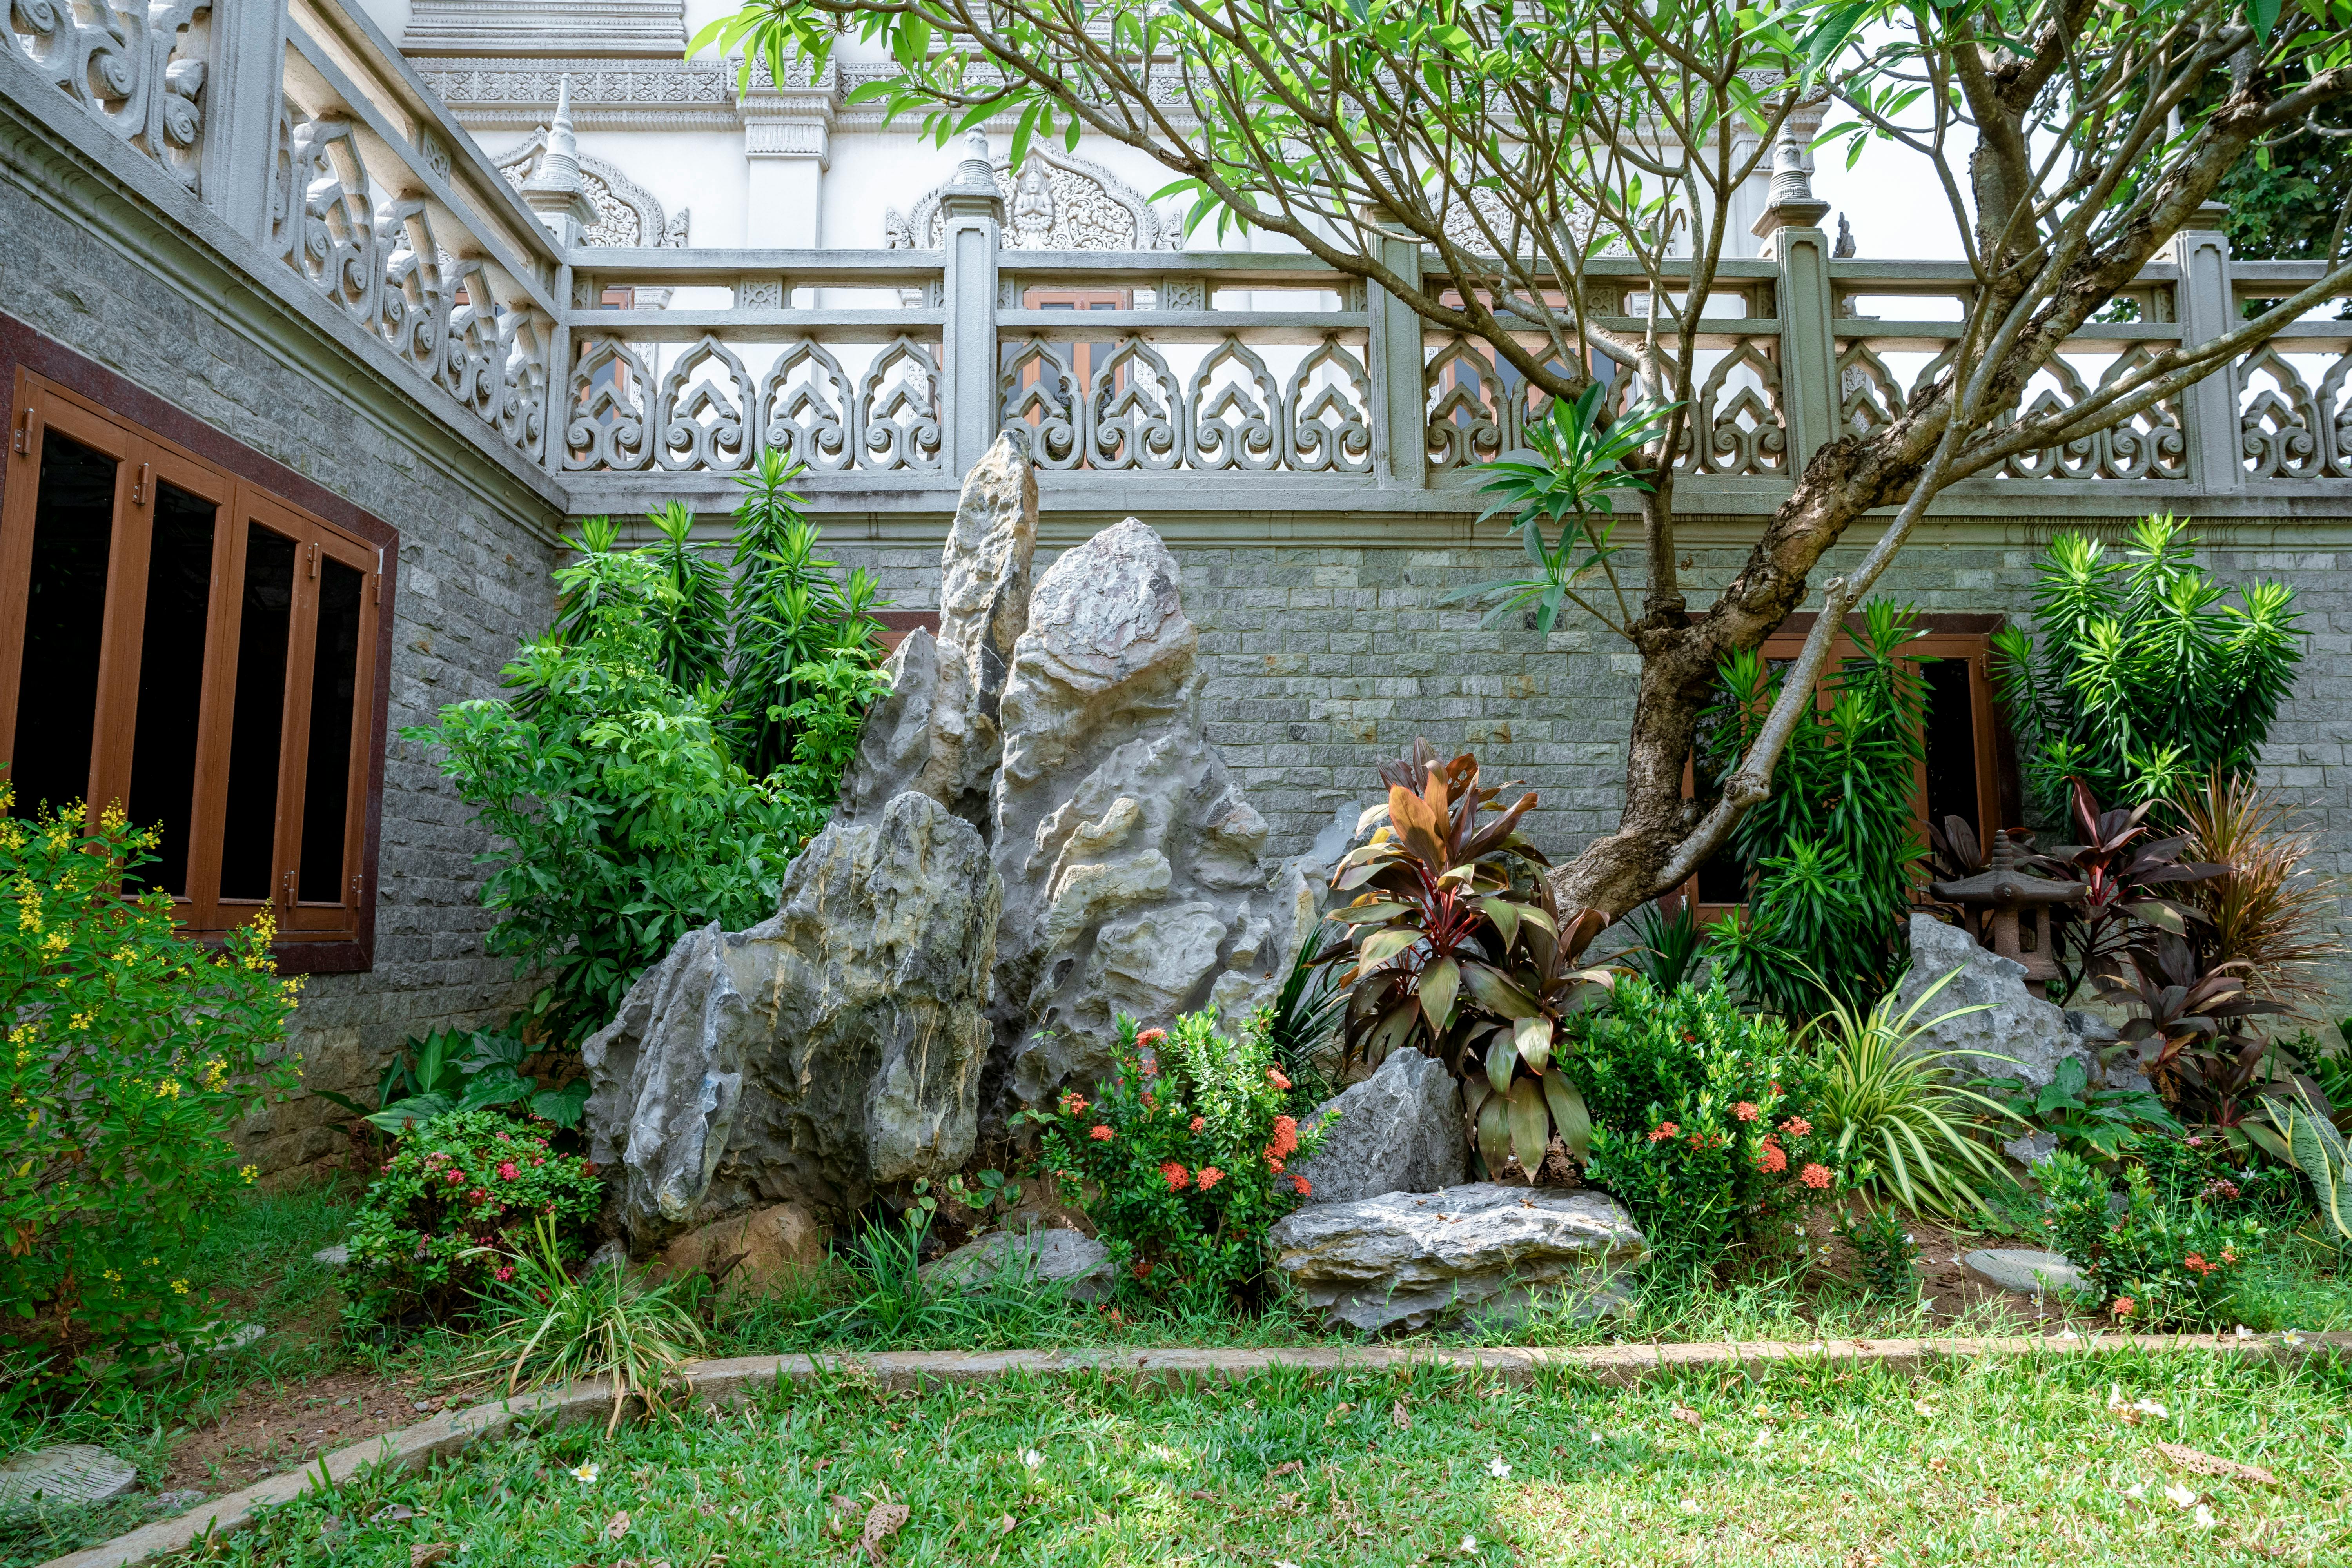 61+ Thousand Caseta Jardin Royalty-Free Images, Stock Photos & Pictures